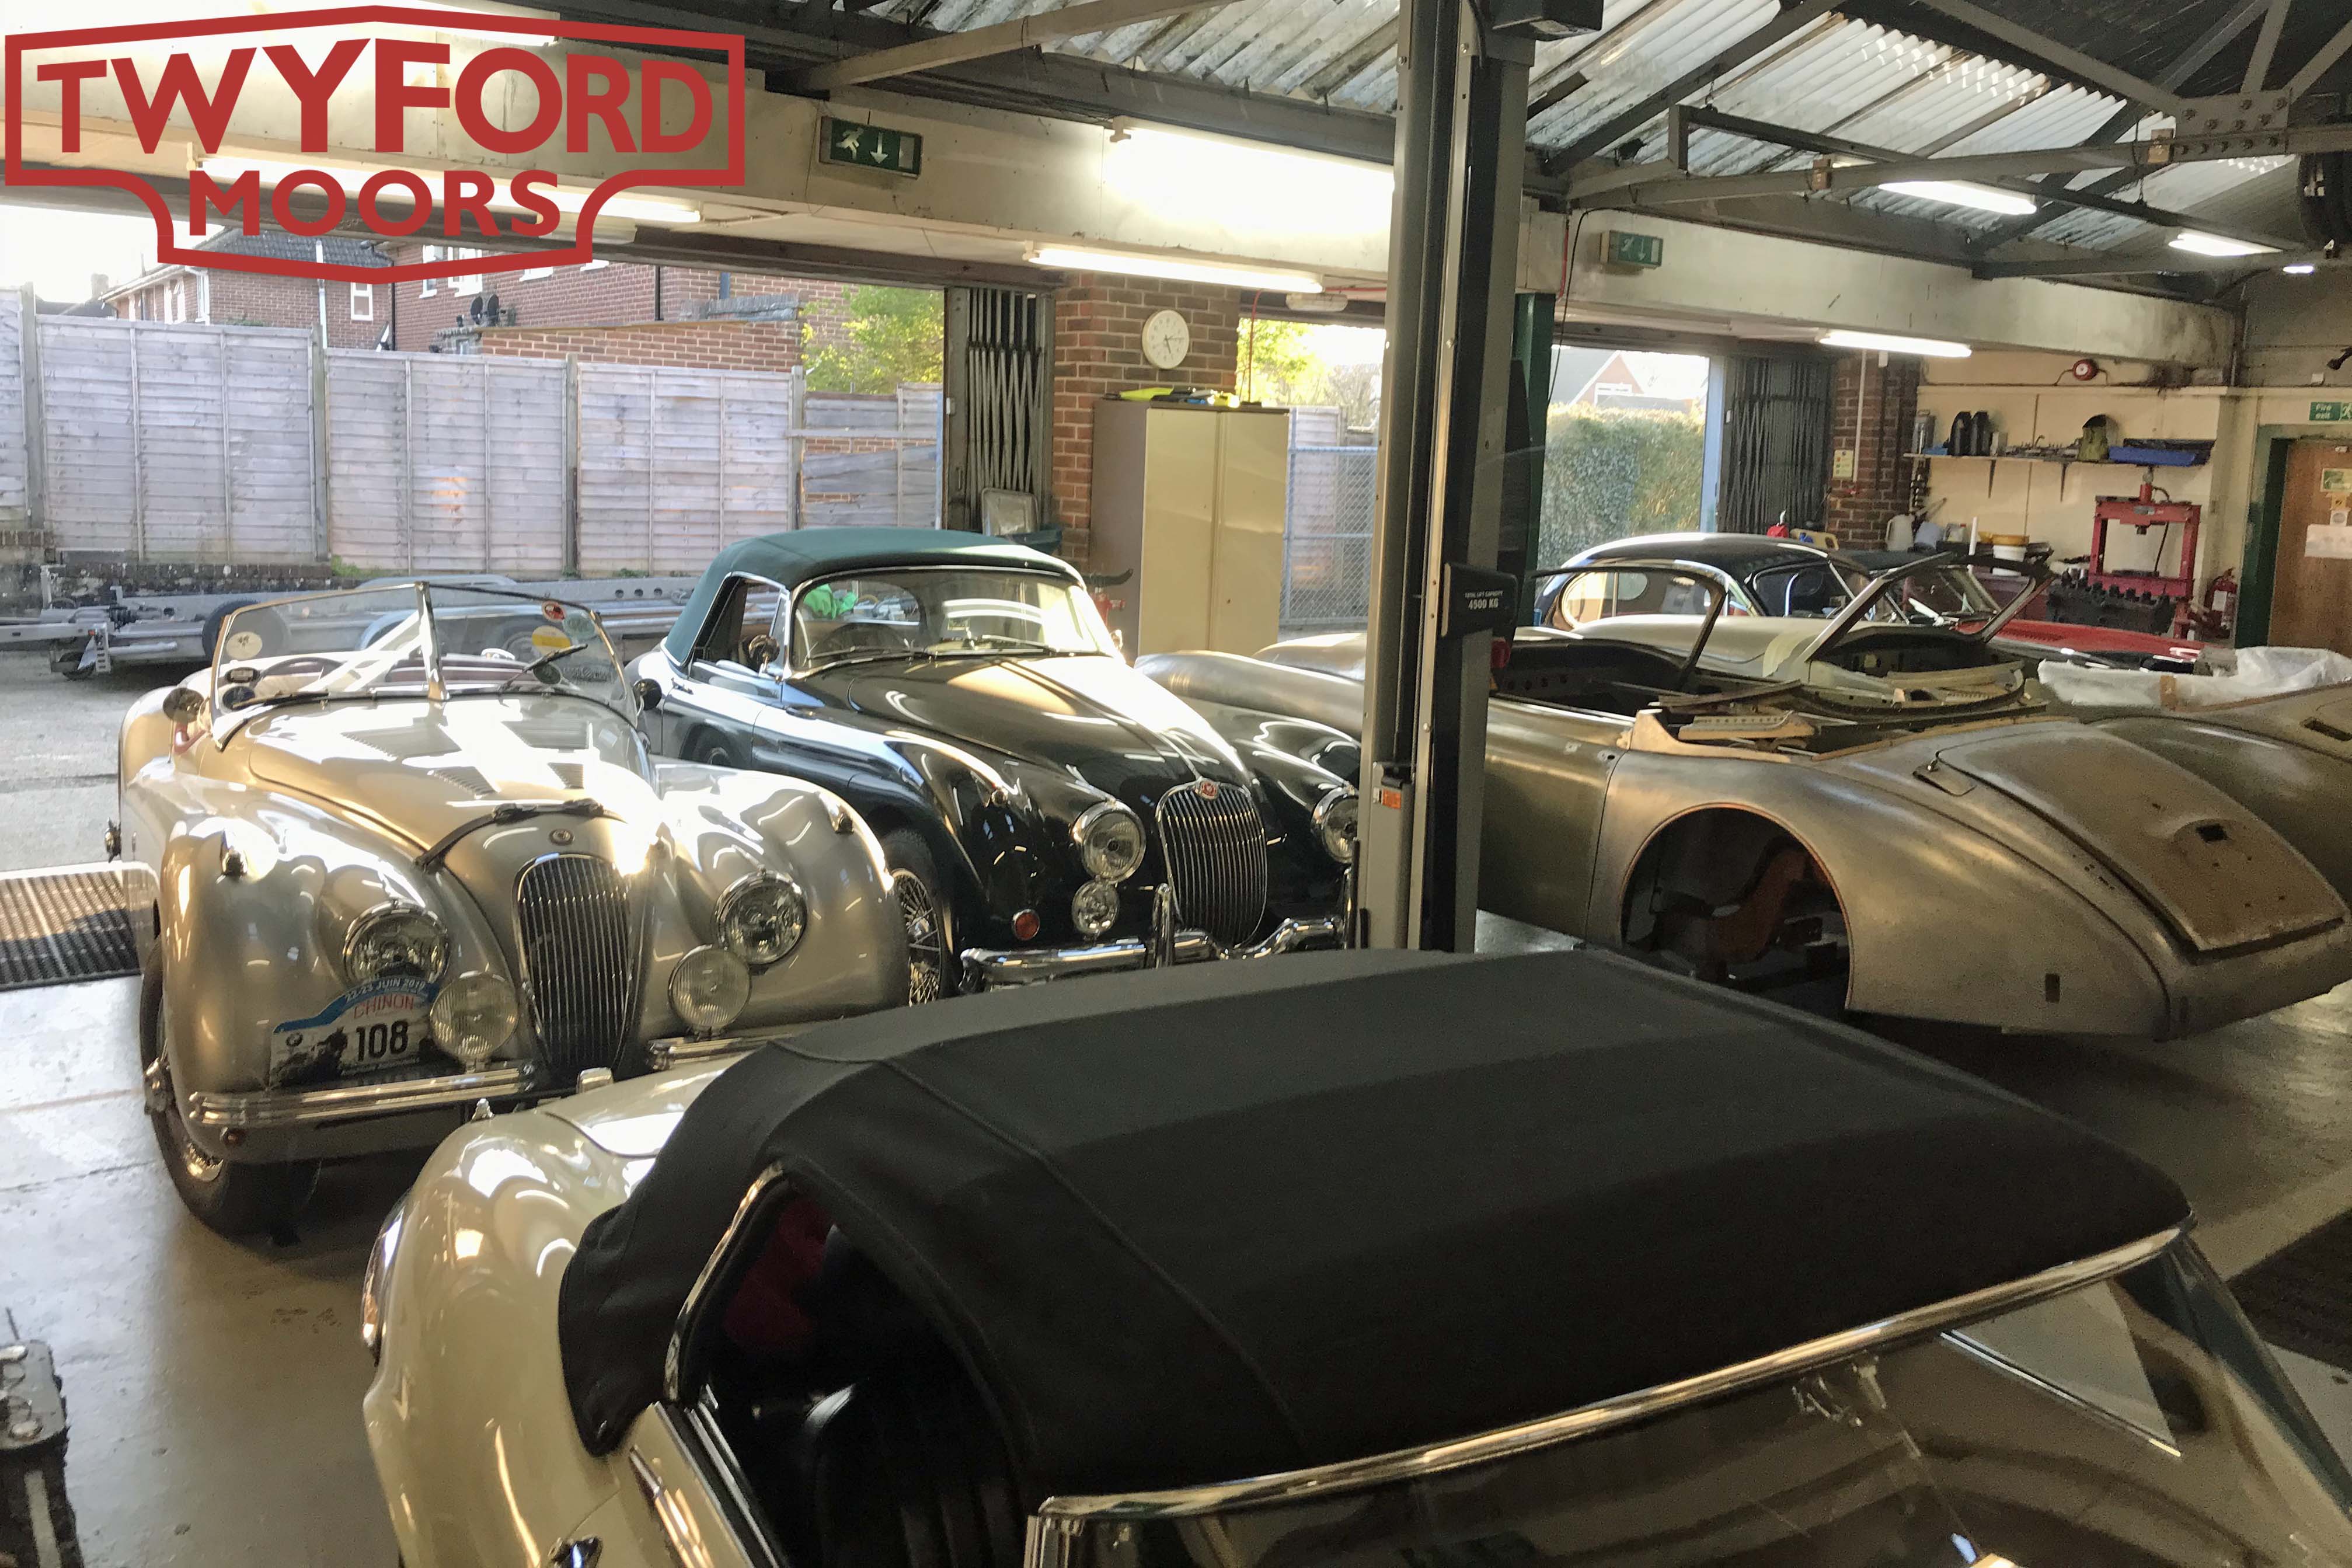 Twyford Moors Classic Cars workshop